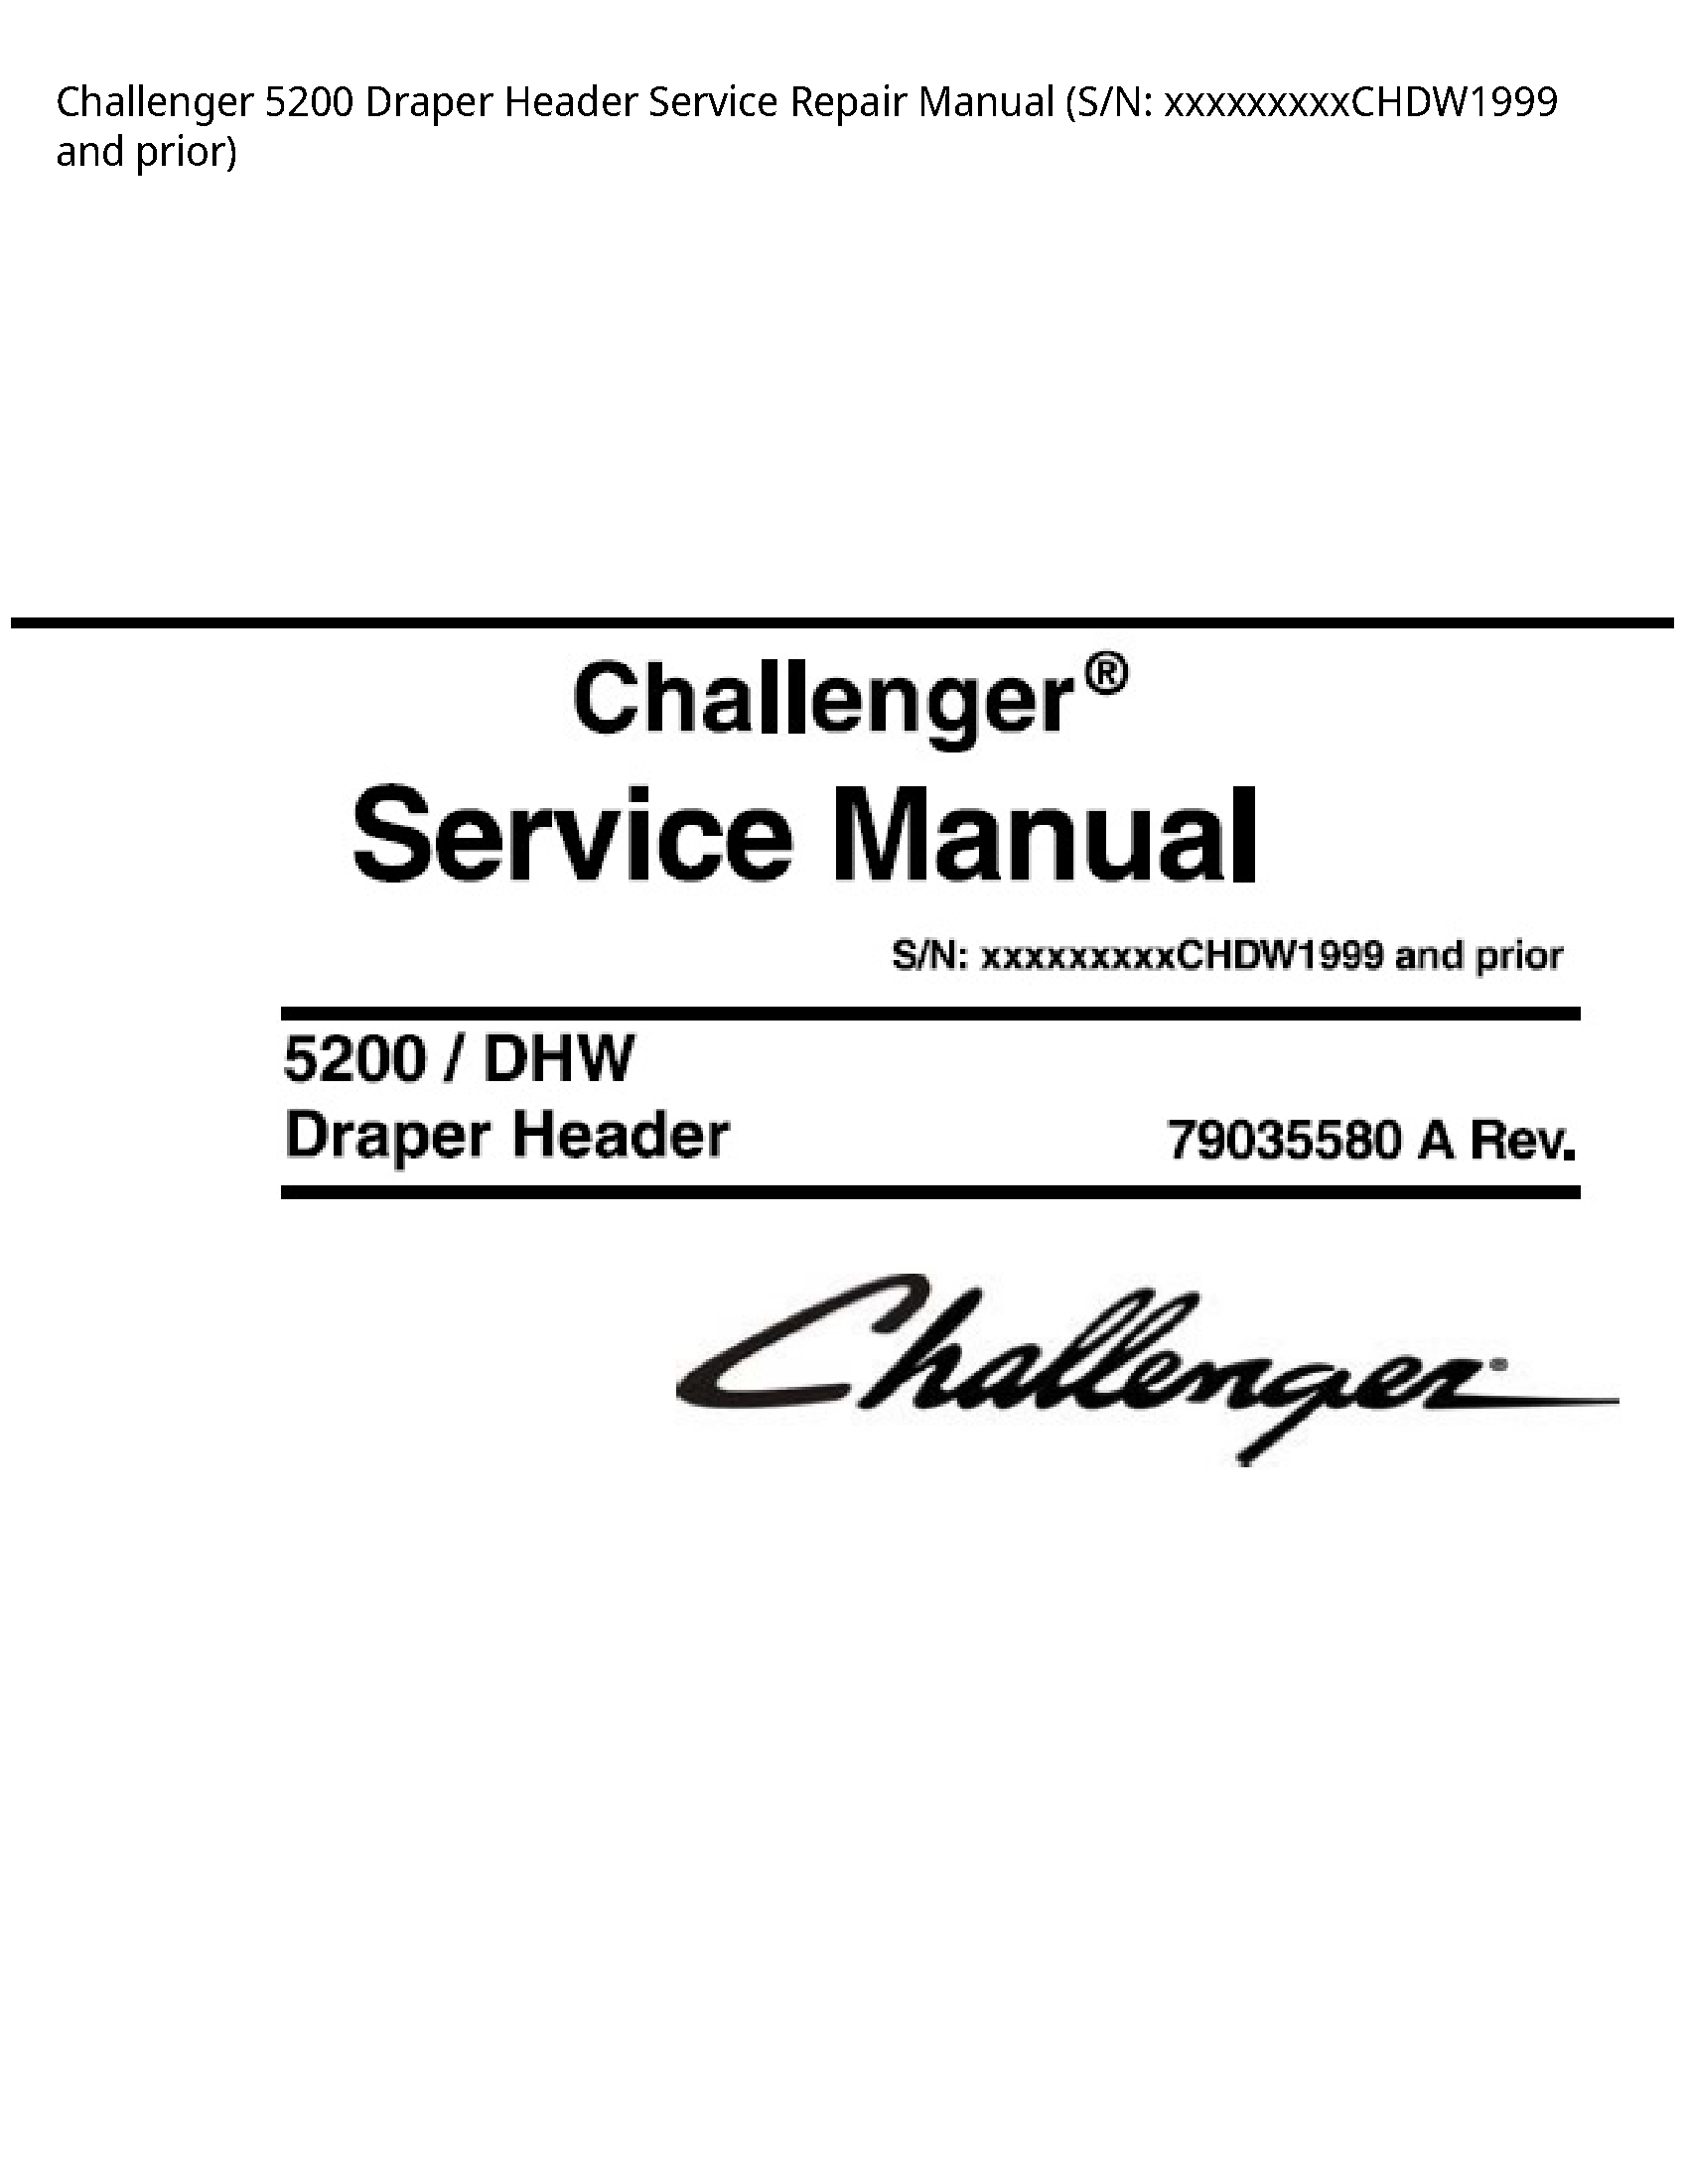 Challenger 5200 Draper Header manual